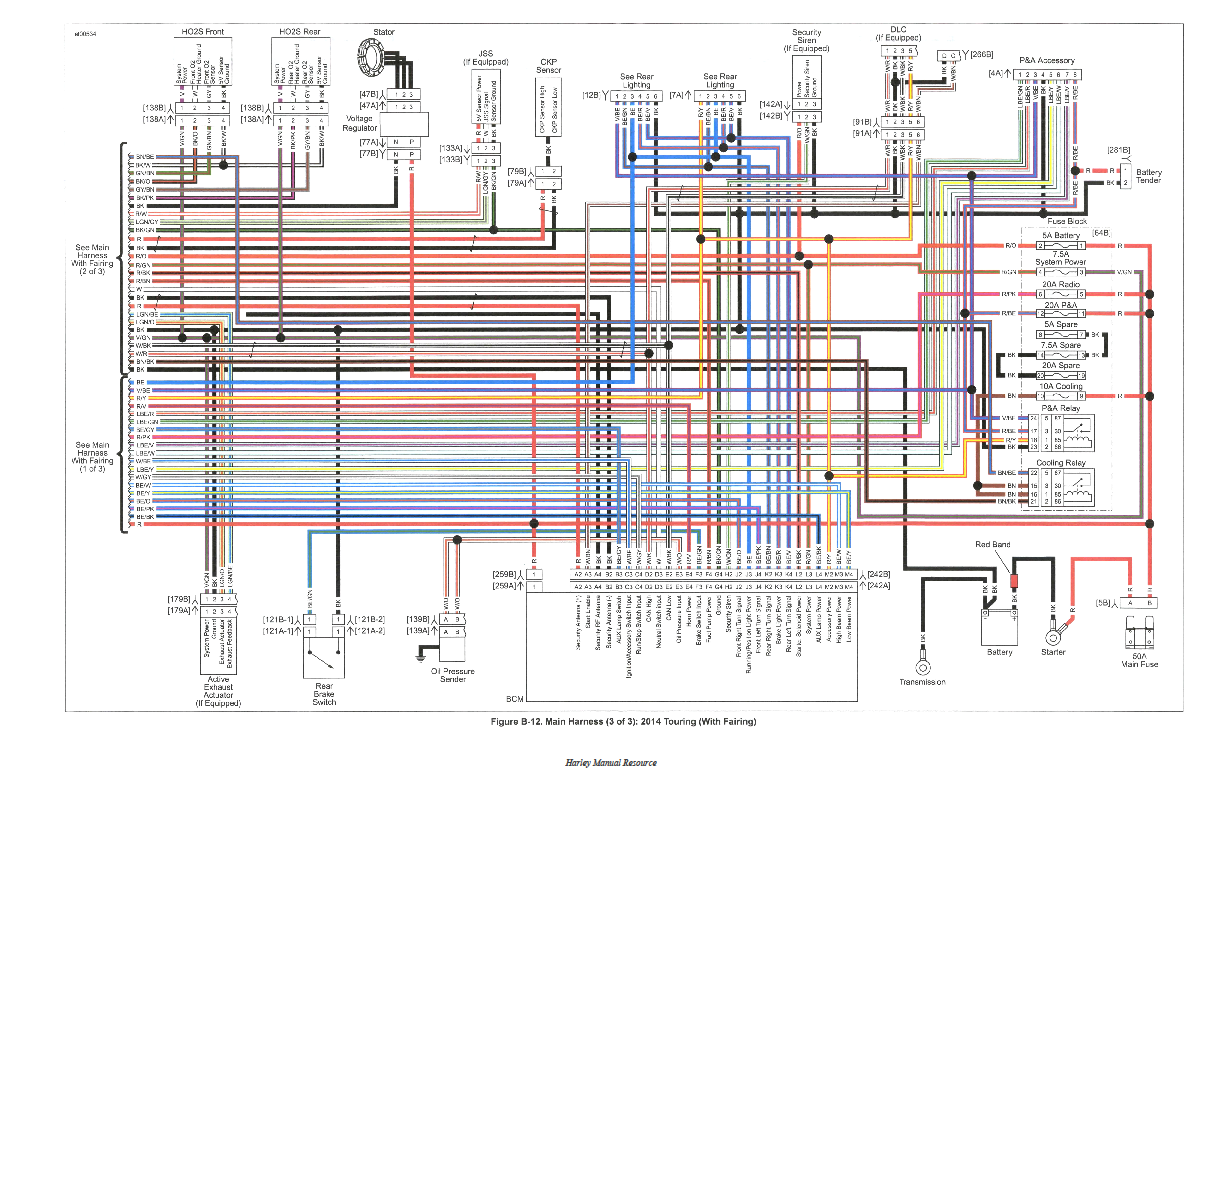 Dyna 2000 Ignition Wiring Diagram from schematron.org